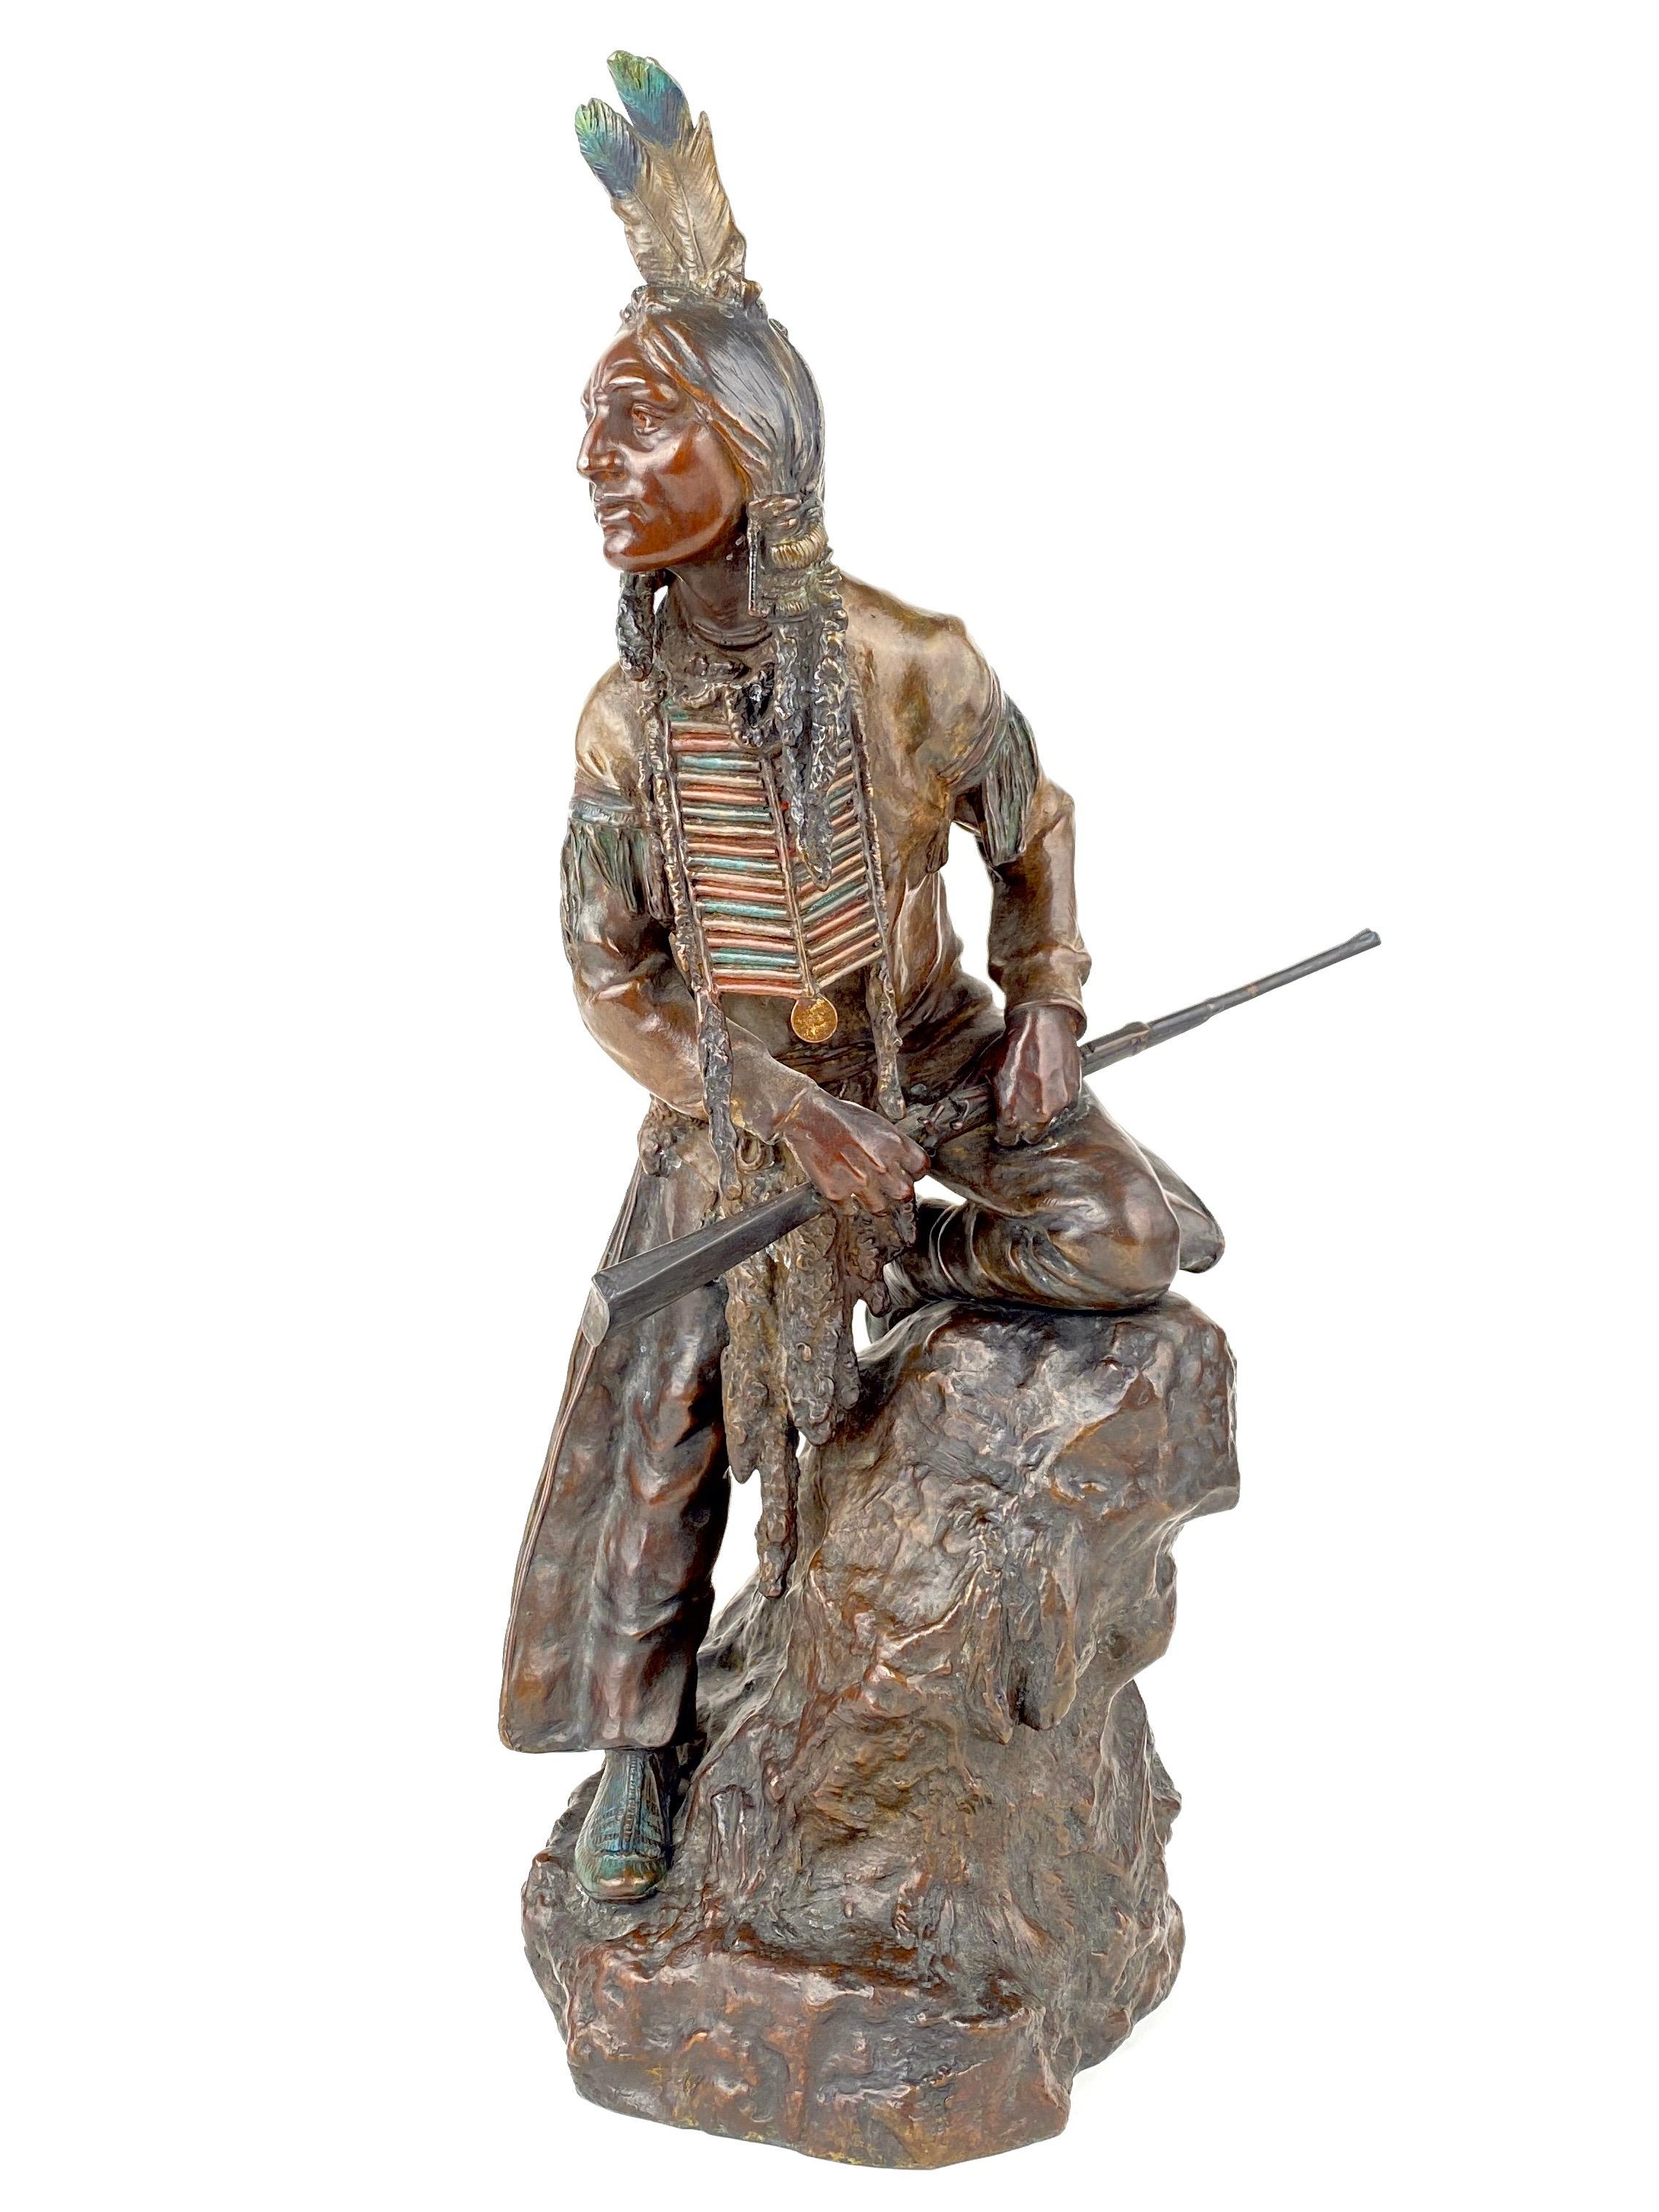 Cold-Painted Austrian Art Nouveau American Indian Bronze “The Scout” by, Carl Kauba